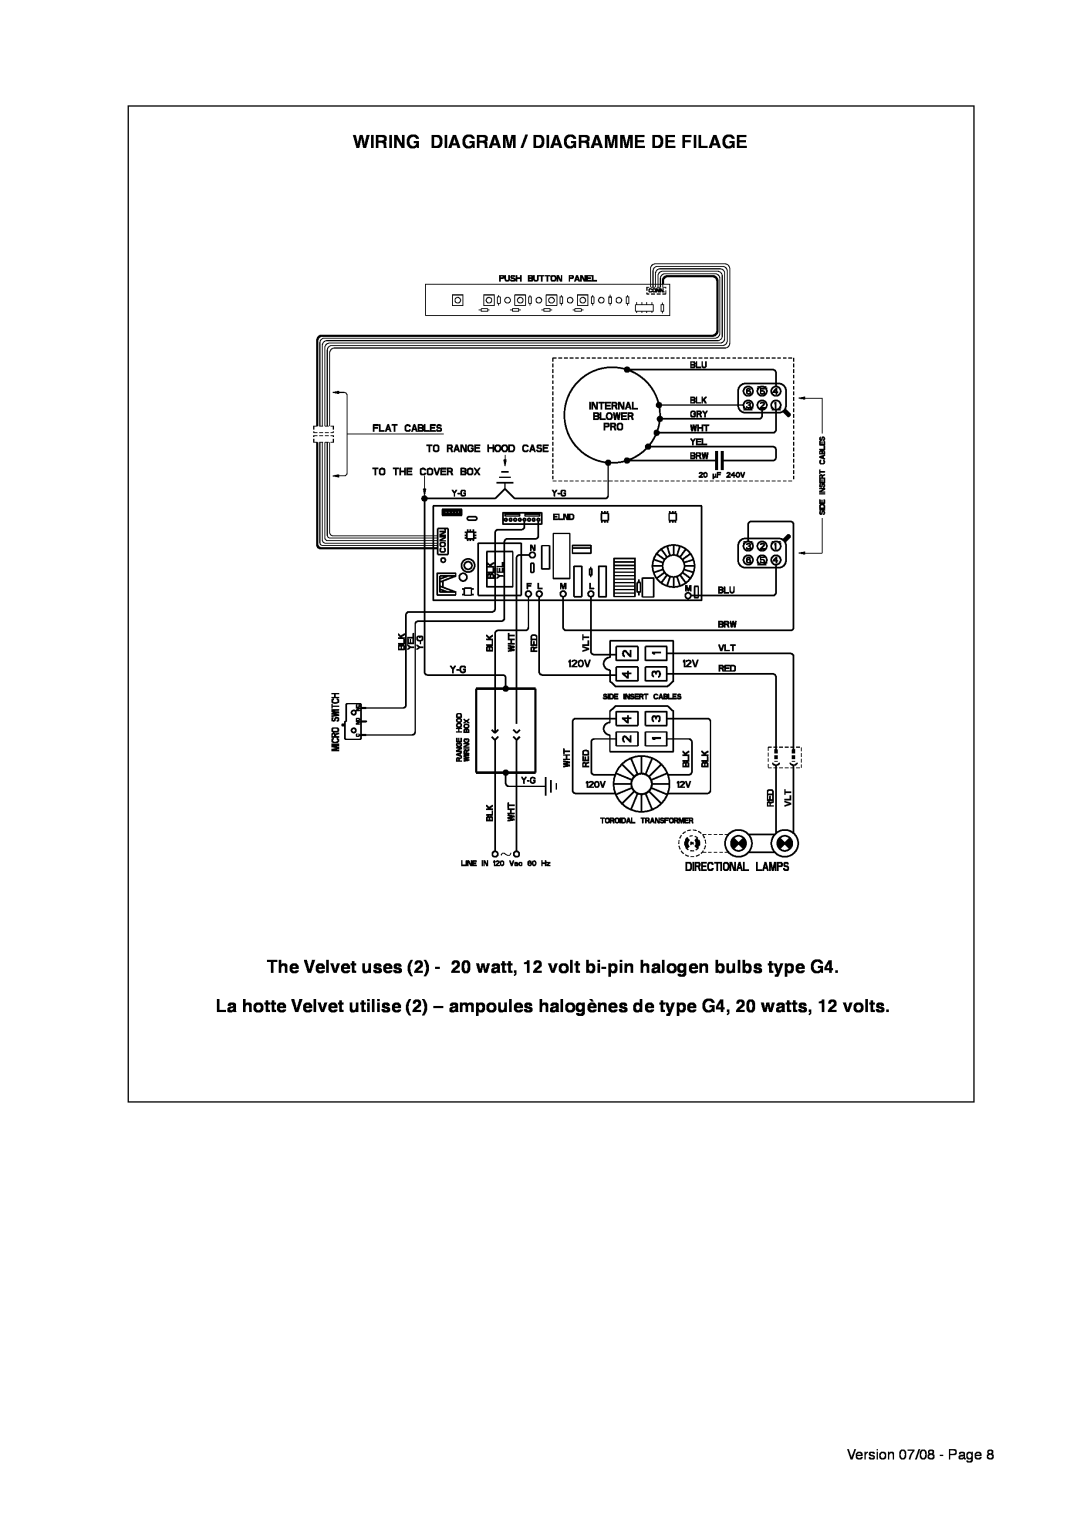 Faber 630006509 Wiring Diagram / Diagramme De Filage, The Velvet uses 2 - 20 watt, 12 volt bi-pin halogen bulbs type G4 